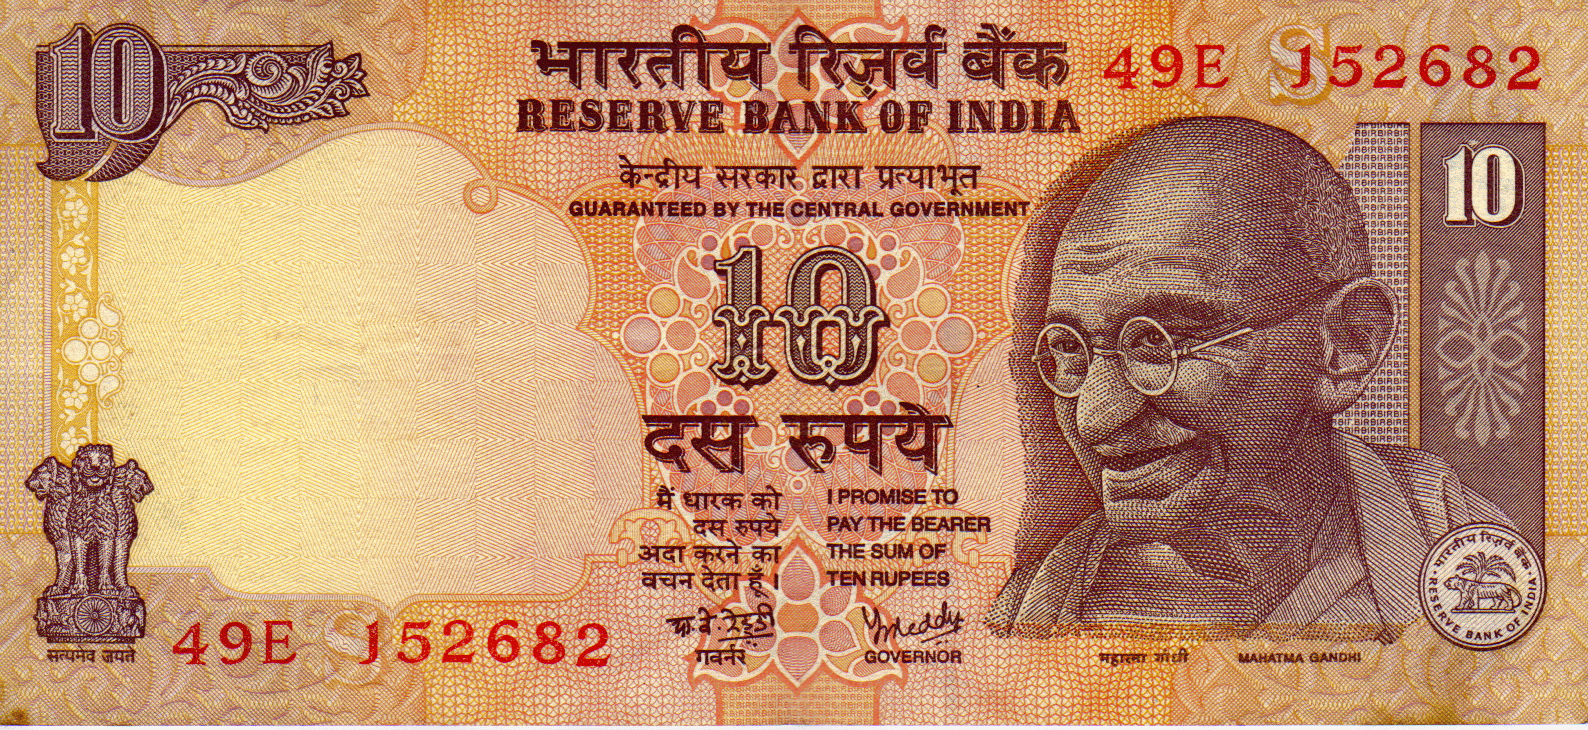 10 Rupees Fake Note - HD Wallpaper 